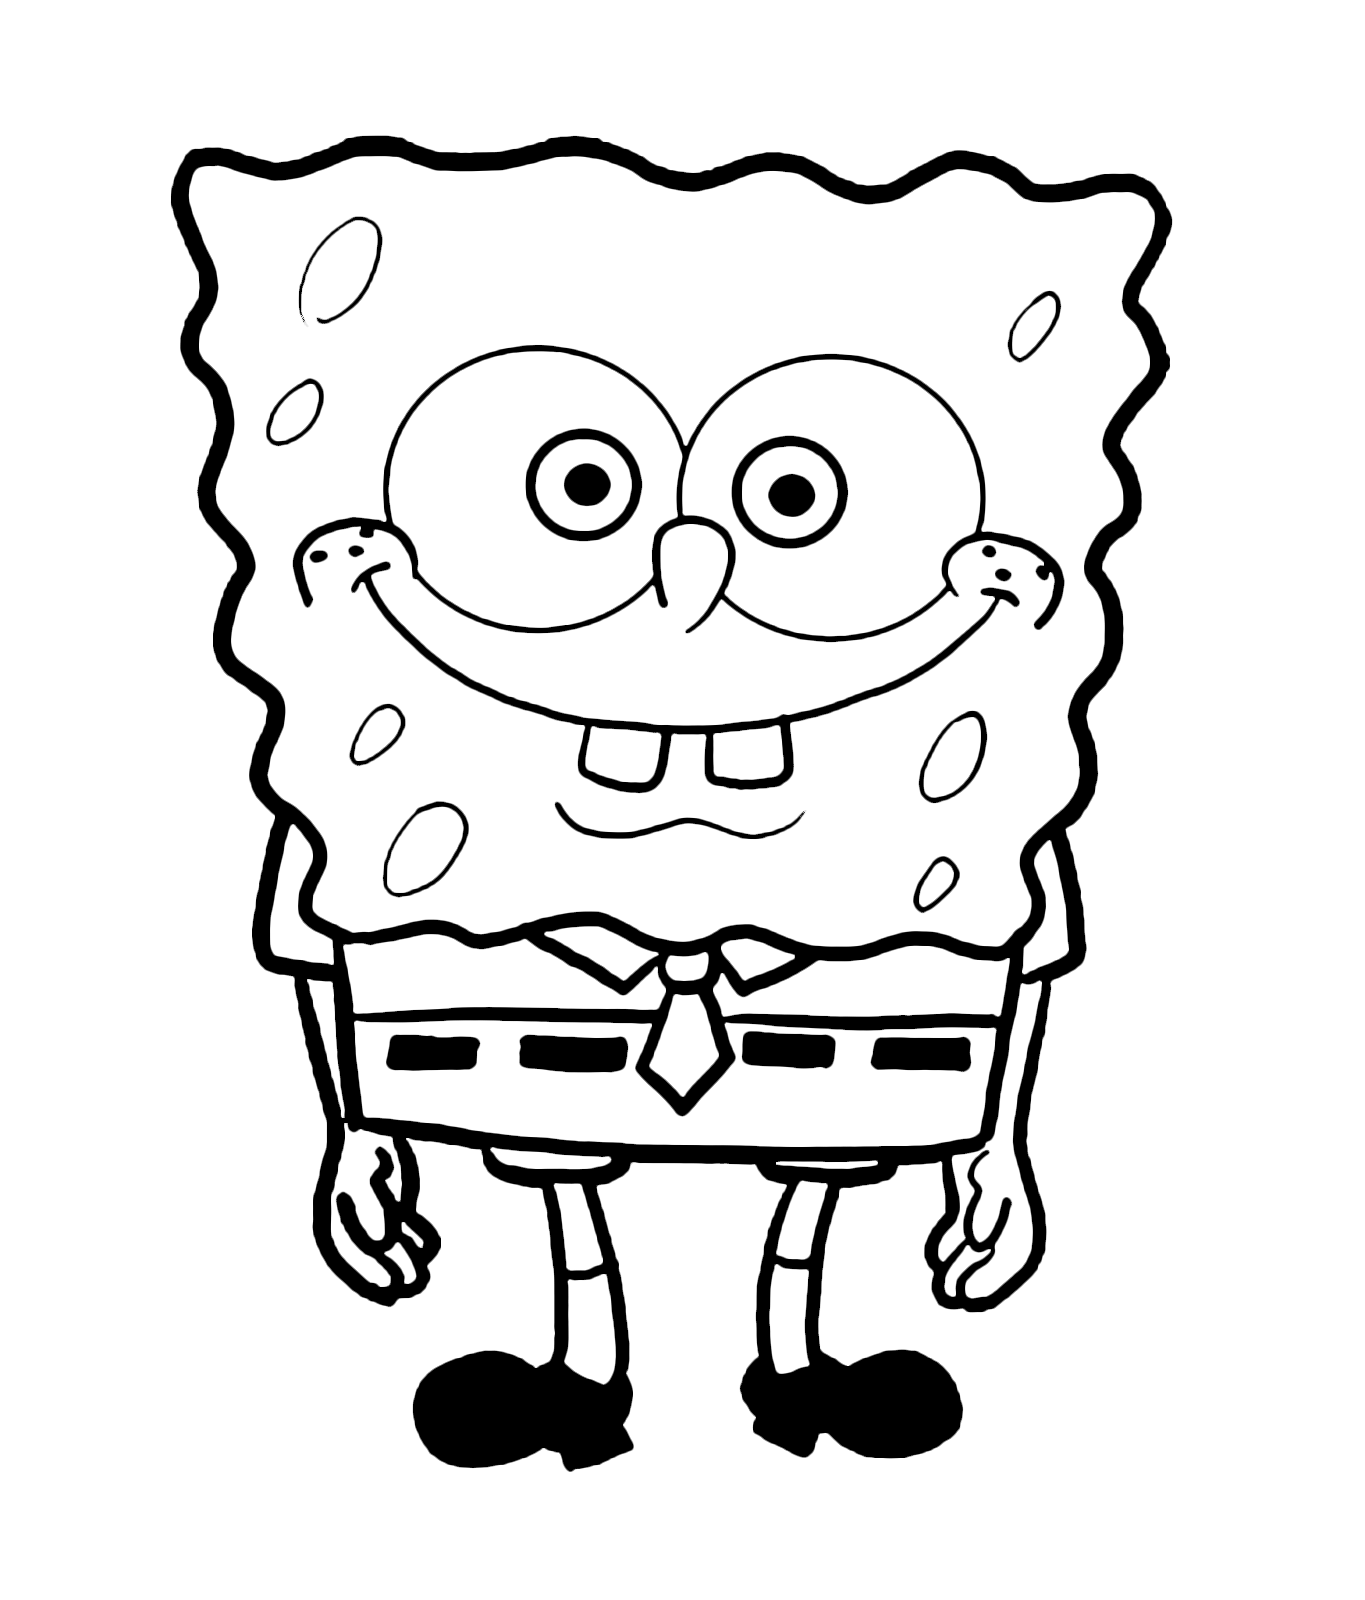 SpongeBob - SpongeBob with his always cheerful expression